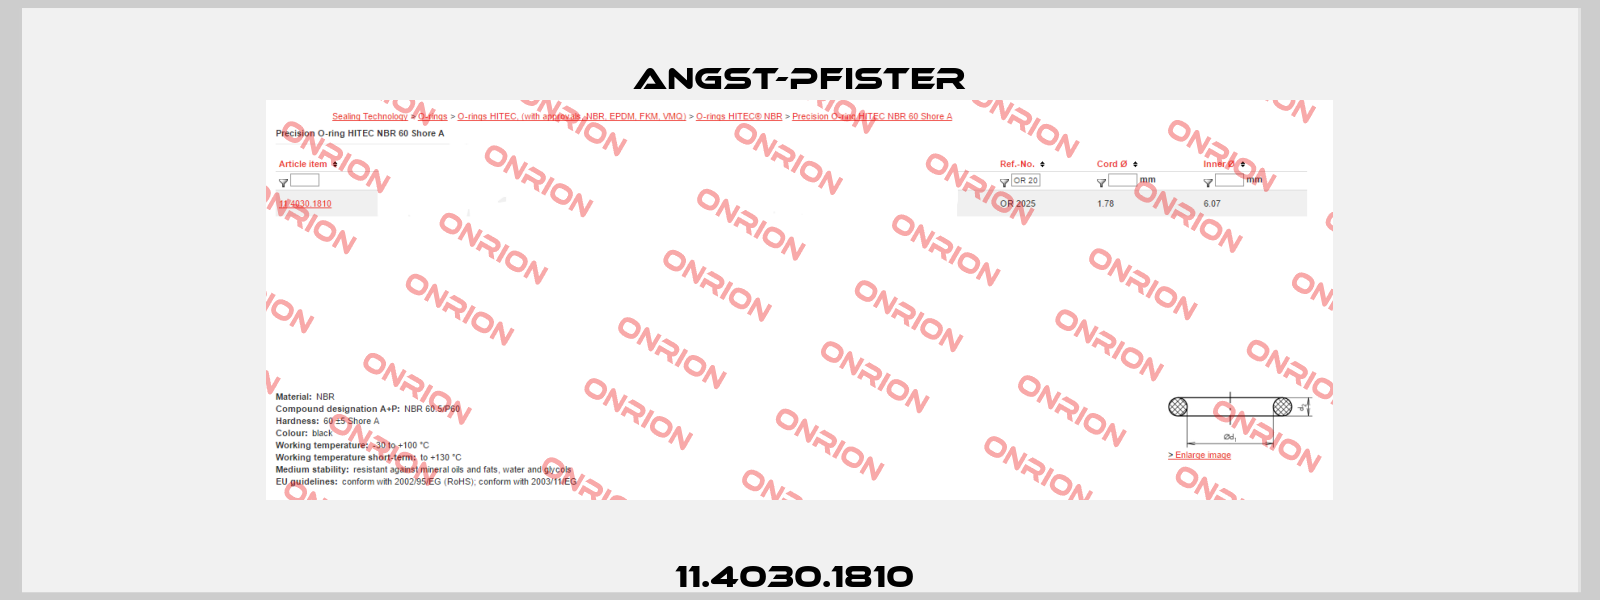 11.4030.1810  Angst-Pfister